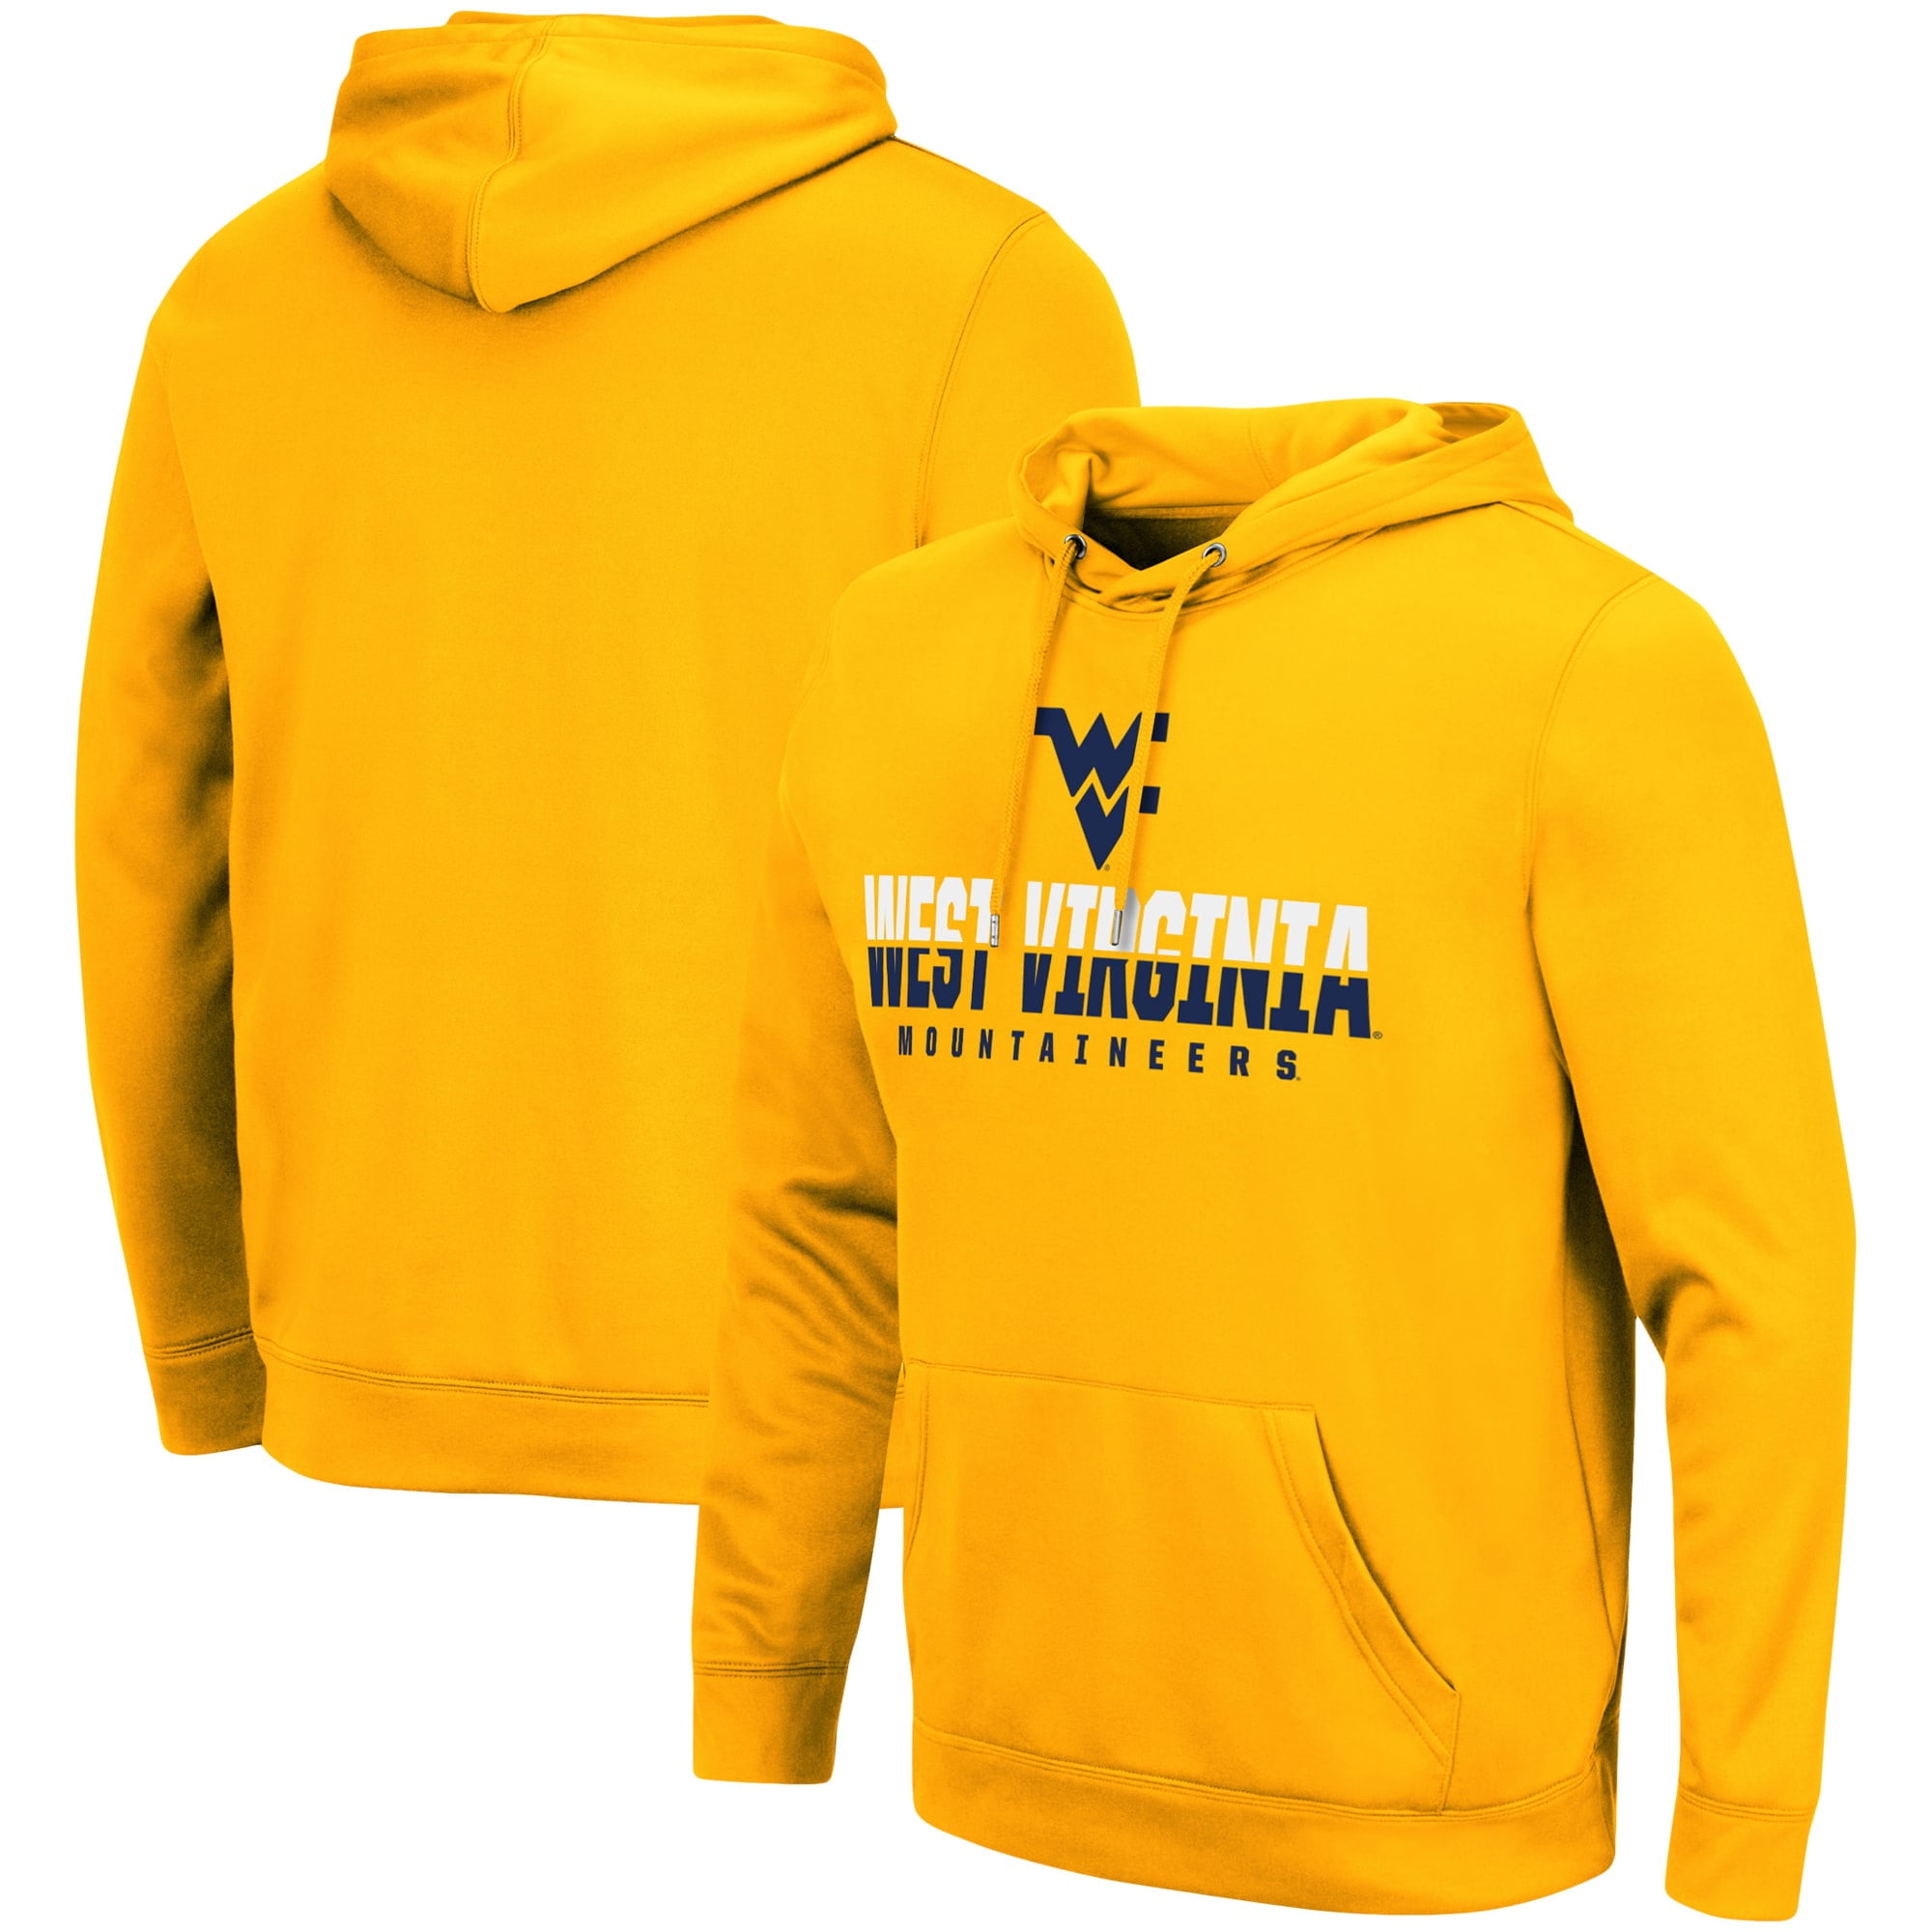 West Virginia Mountaineers Hooded Sweatshirt Gold 